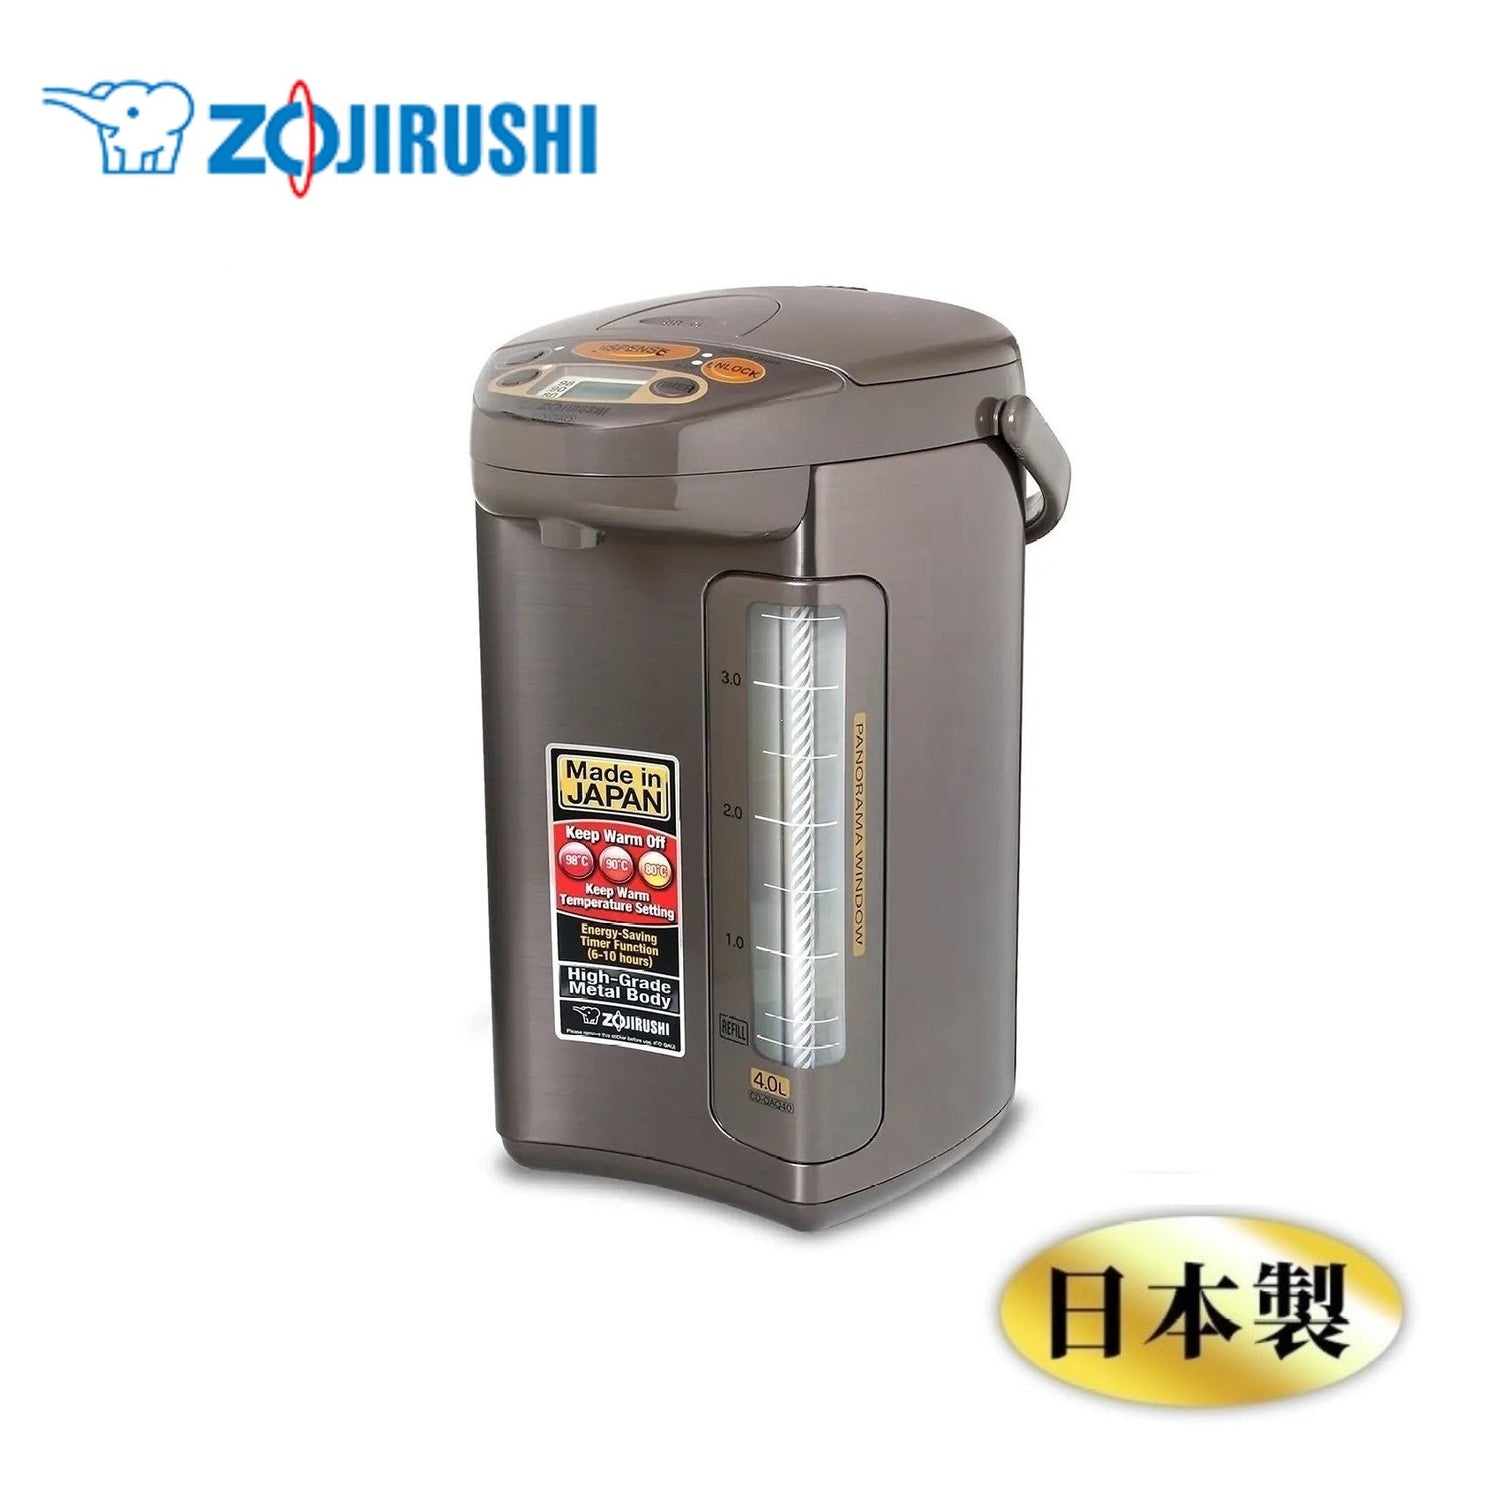 Zojirushi Hot Water Dispenser CD-QAQ40 (Made in Japan)